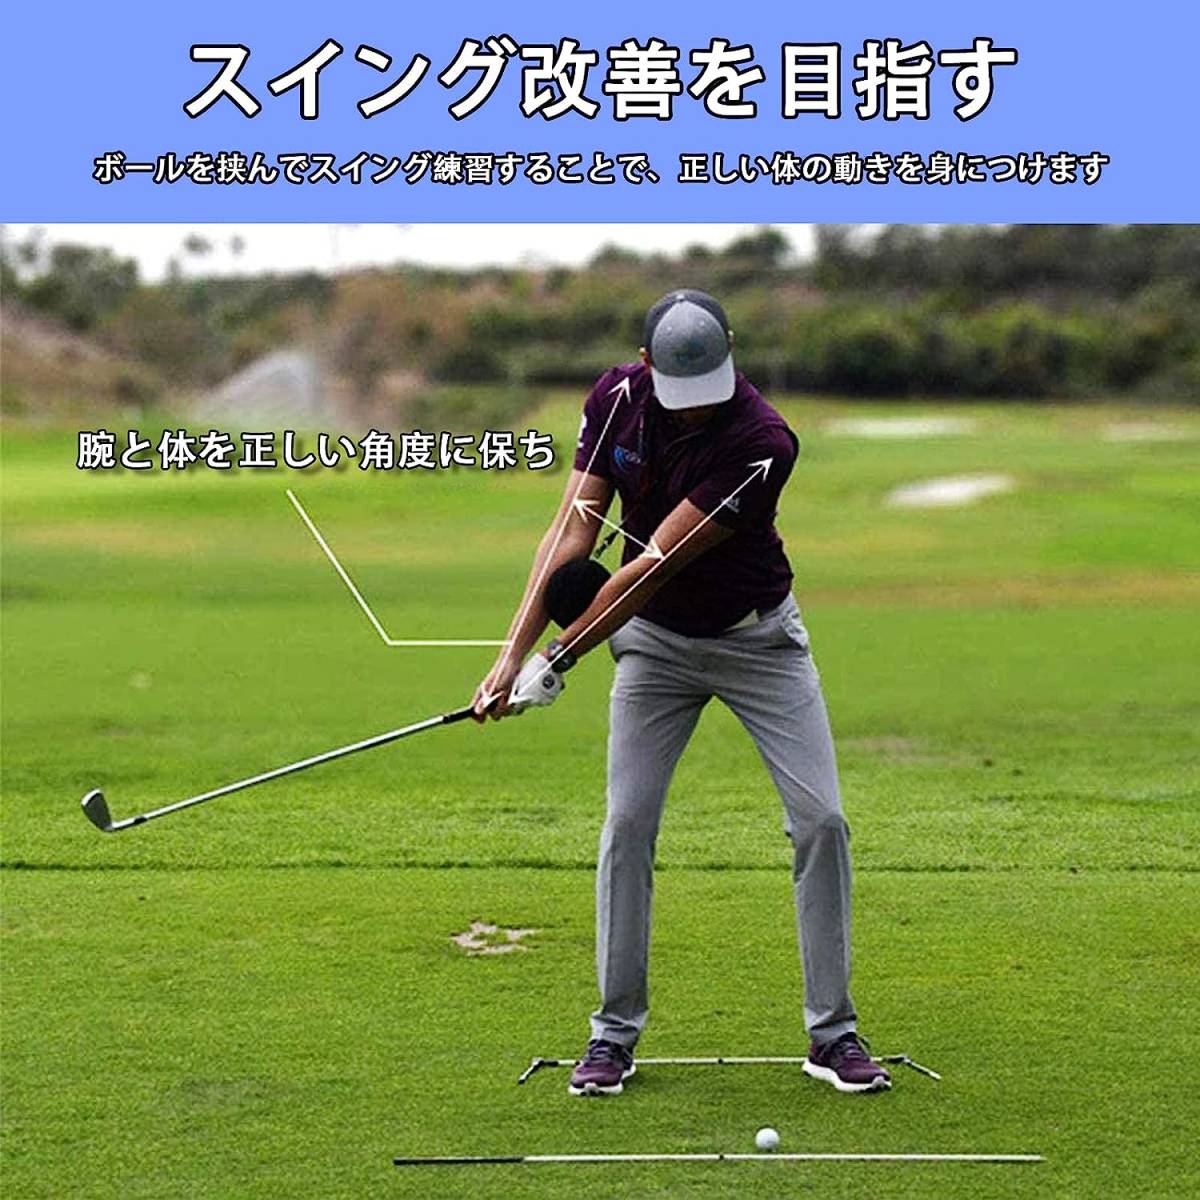 Rouly ゴルフ スイング矯正 練習ボール スイング 練習 ゴルフ矯正 姿勢矯正 ゴルフ練習器具 エアポンプ付き_画像4